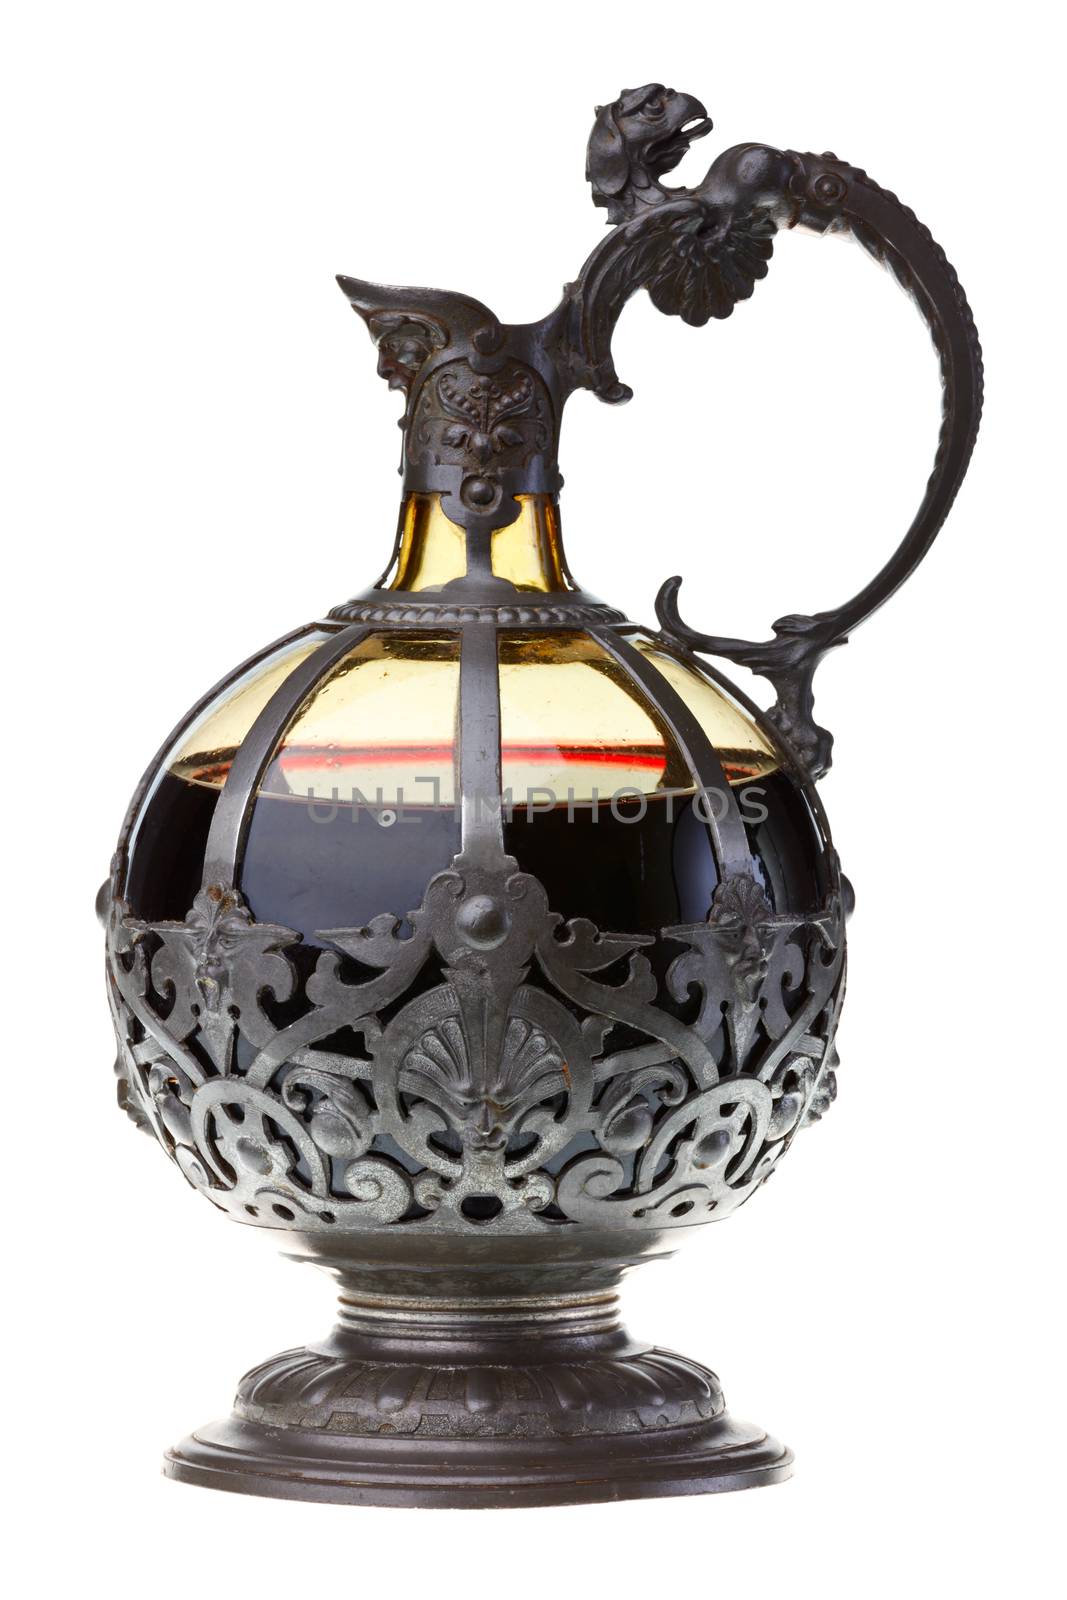 Antique wine jug by naumoid